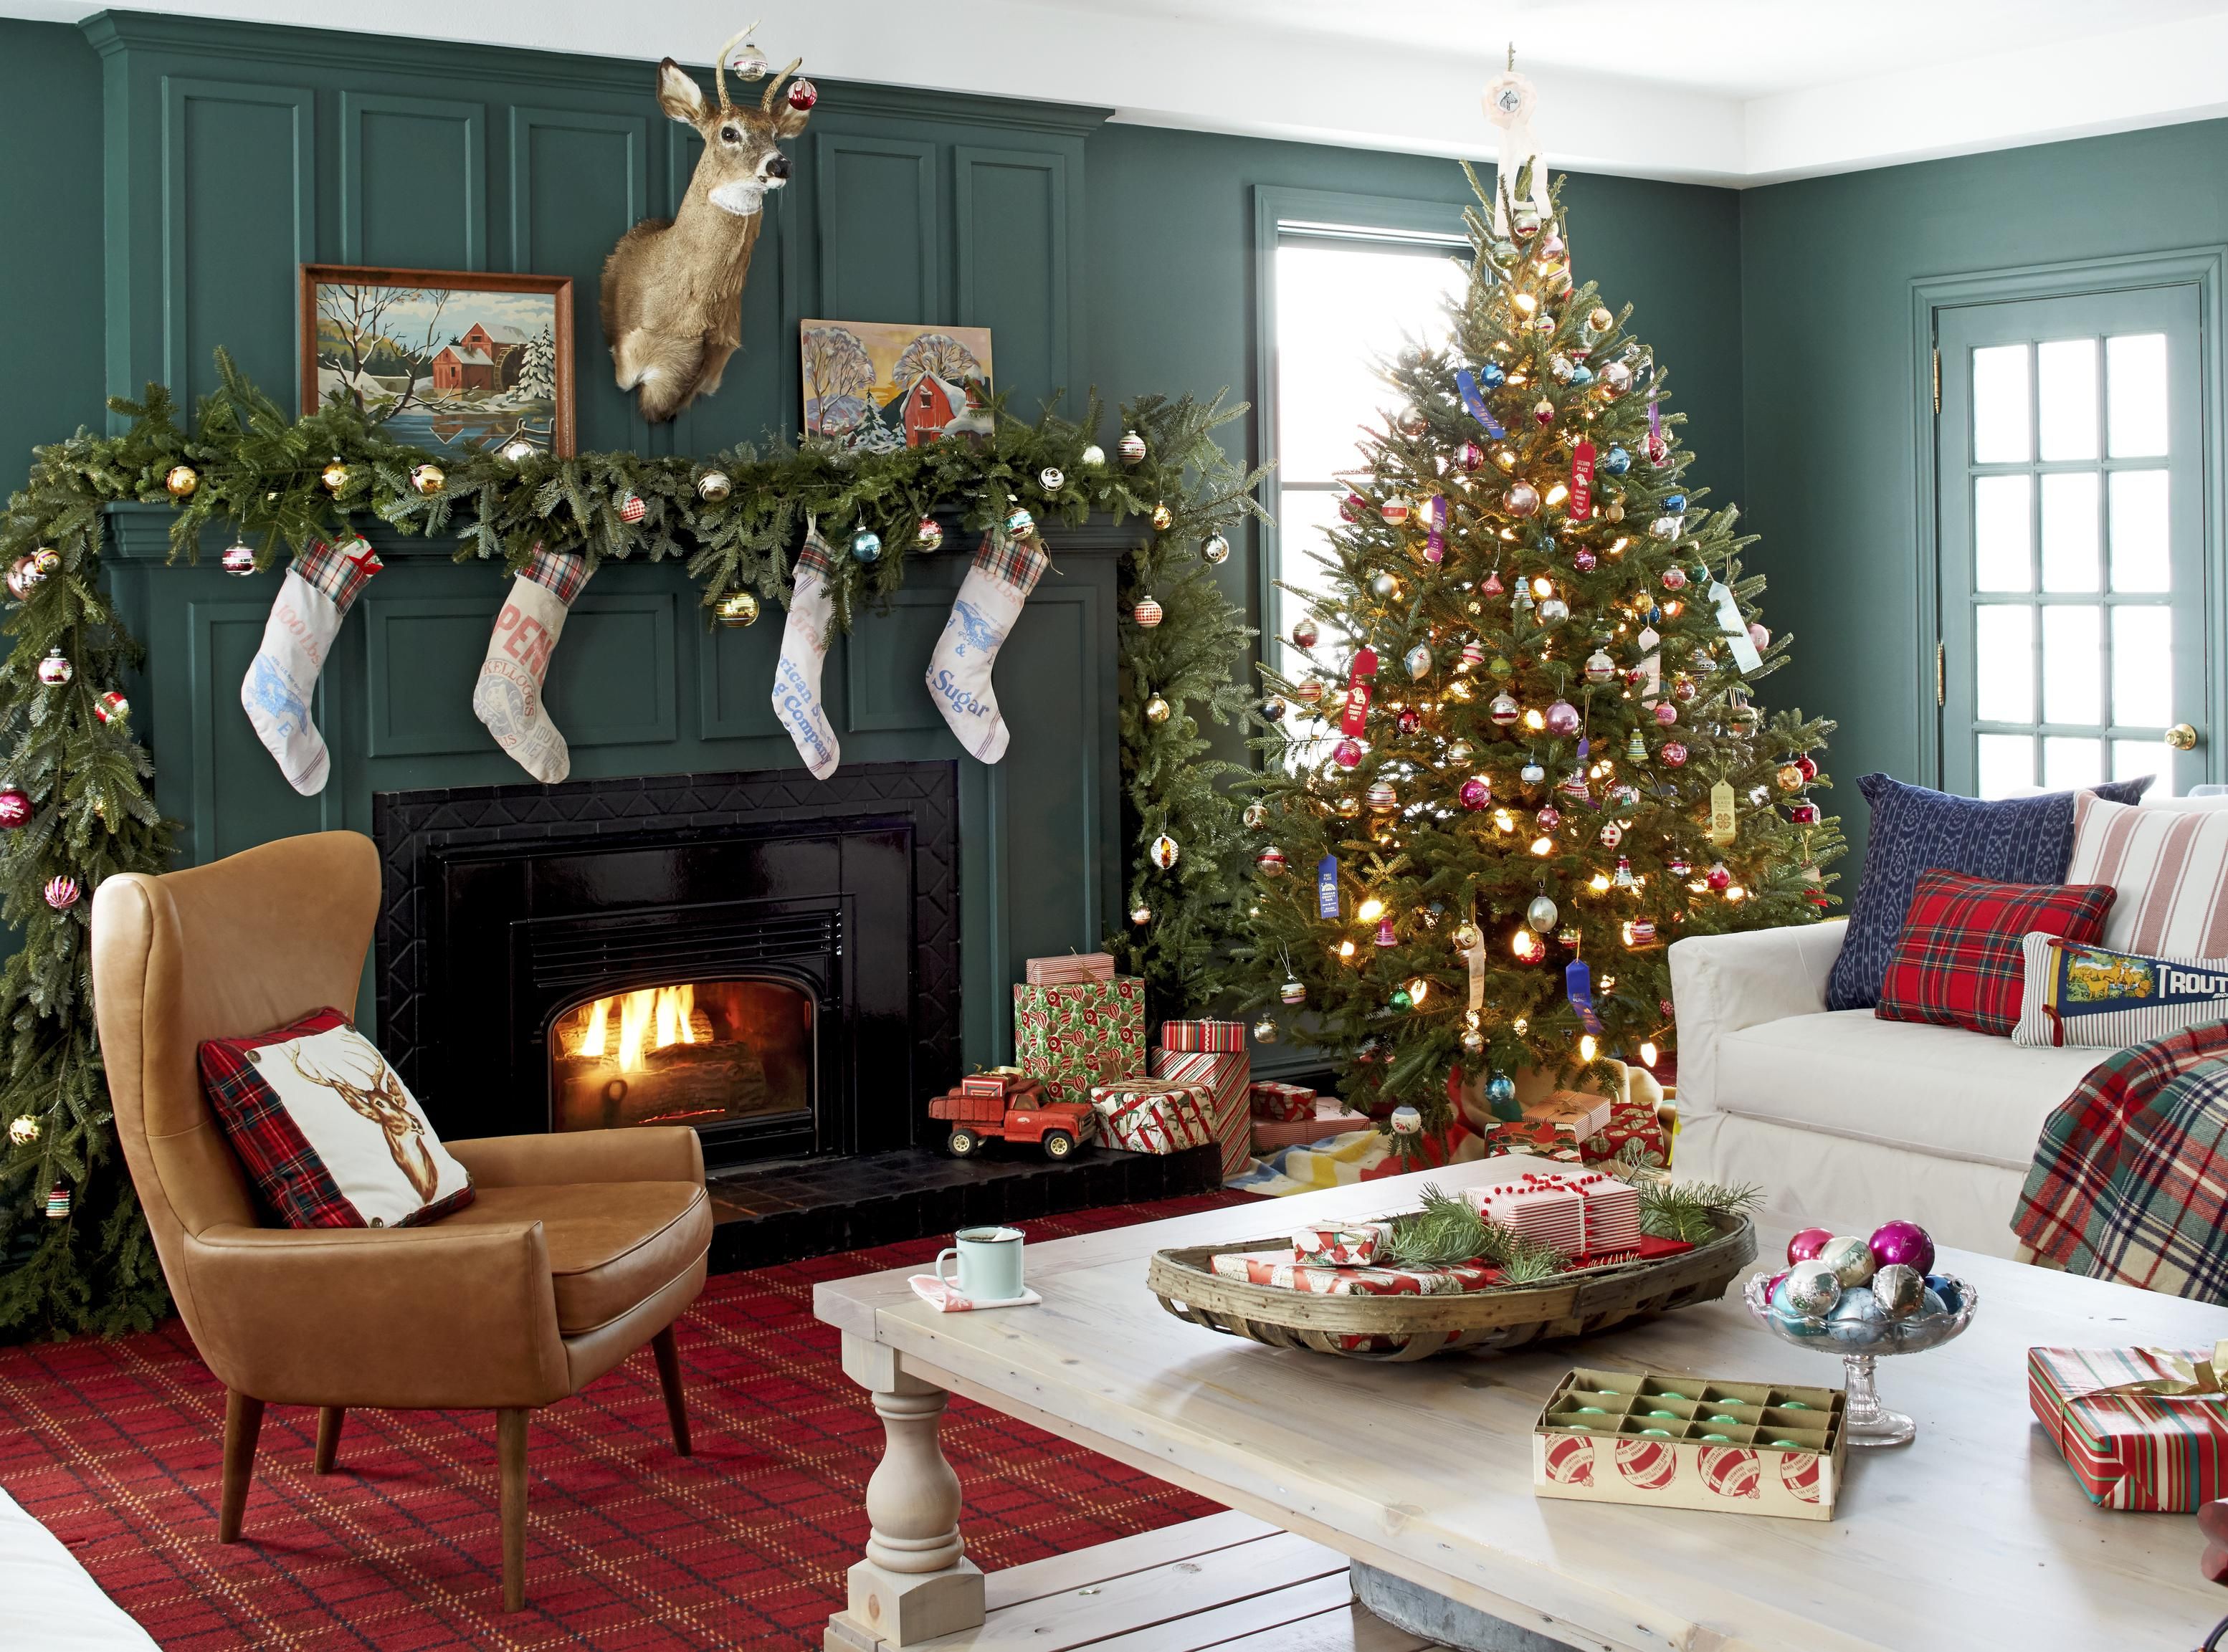 31 Farmhouse Christmas Decorating Ideas - DIY Holiday Decorating ...